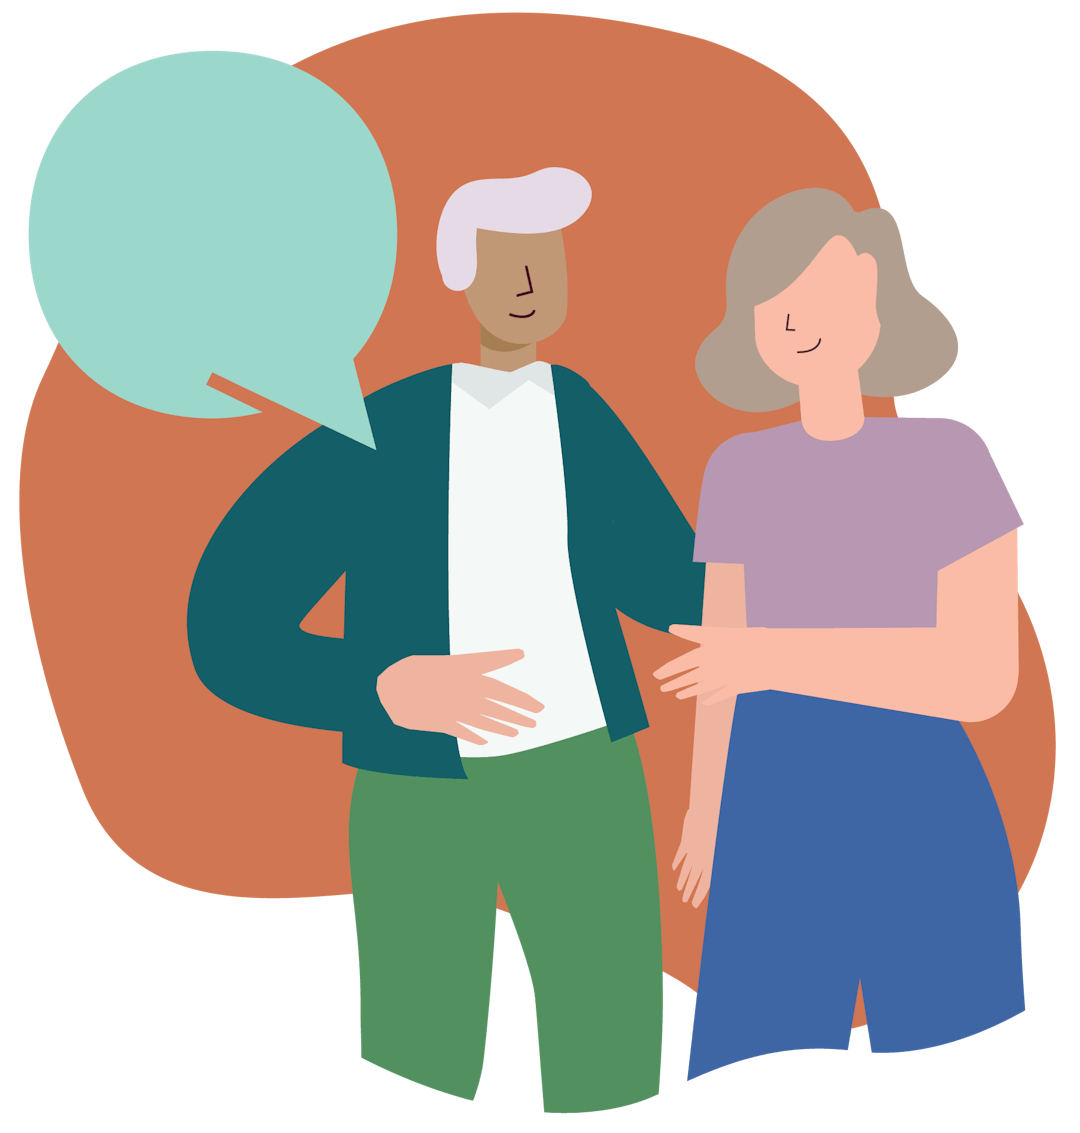 Cartoon illustration of two people talking